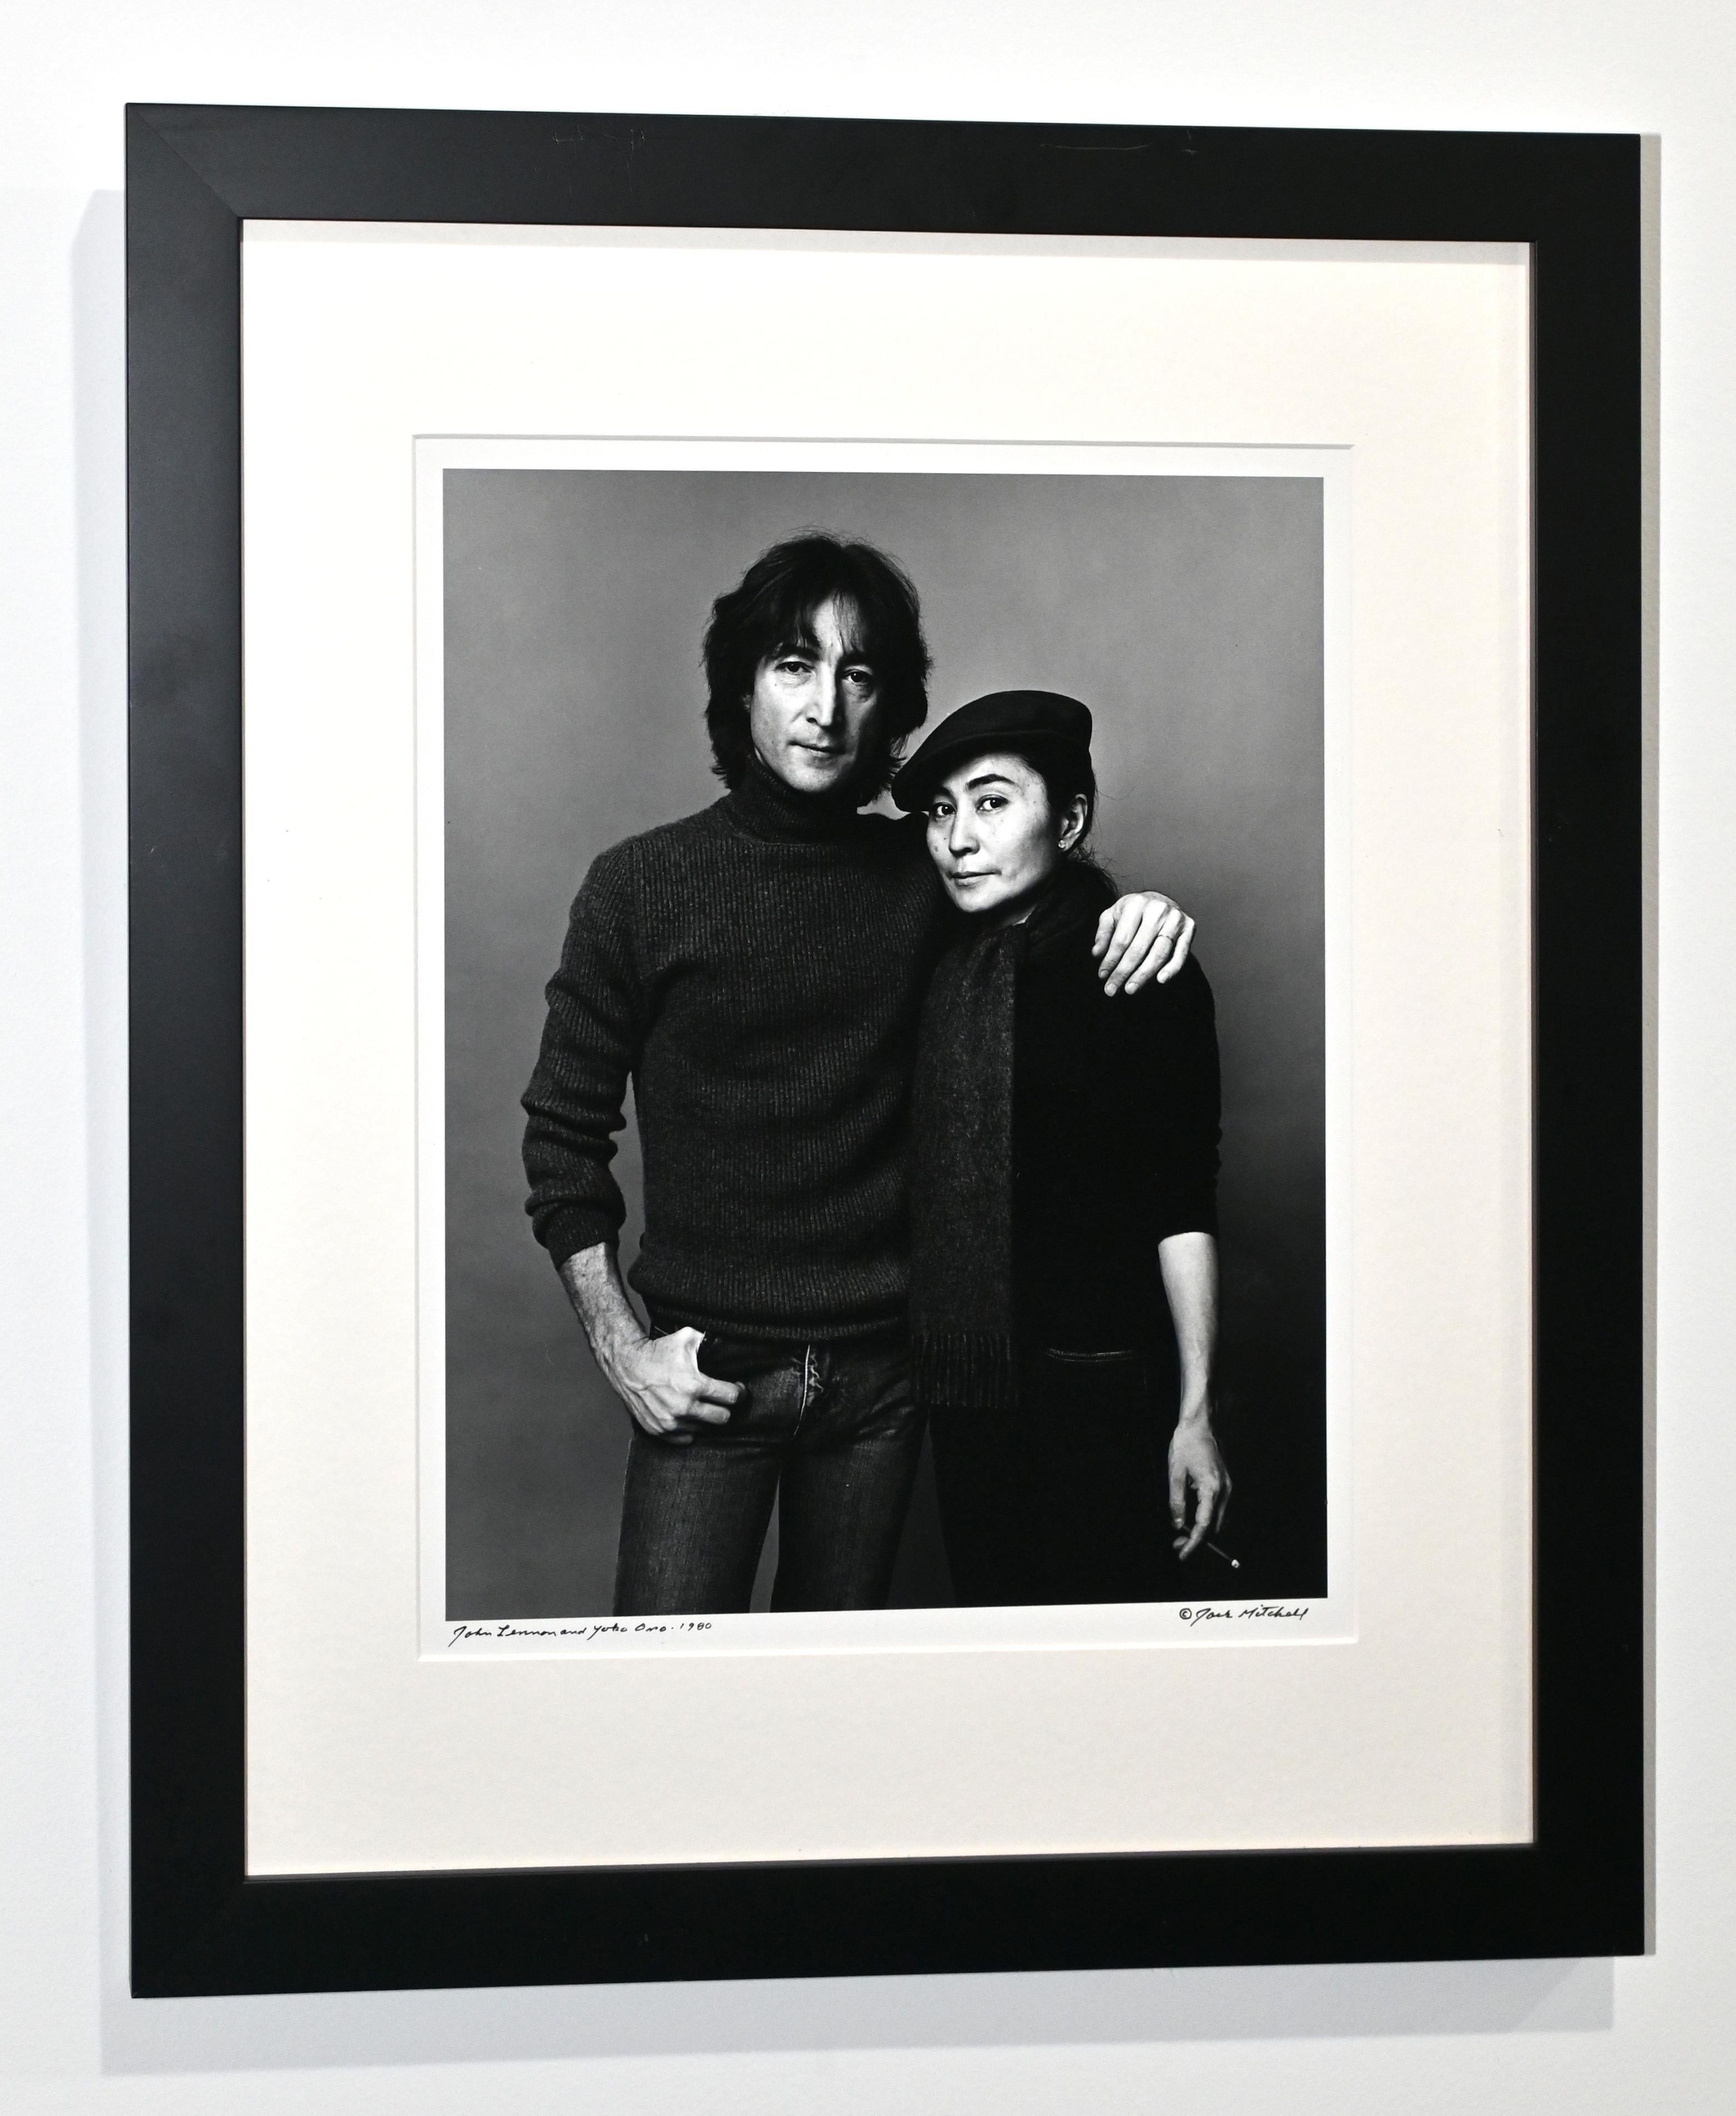 Jack Mitchell Black and White Photograph - Special Sale Framed John Lennon & Yoko Ono Vintage Silver Gelatin Photo